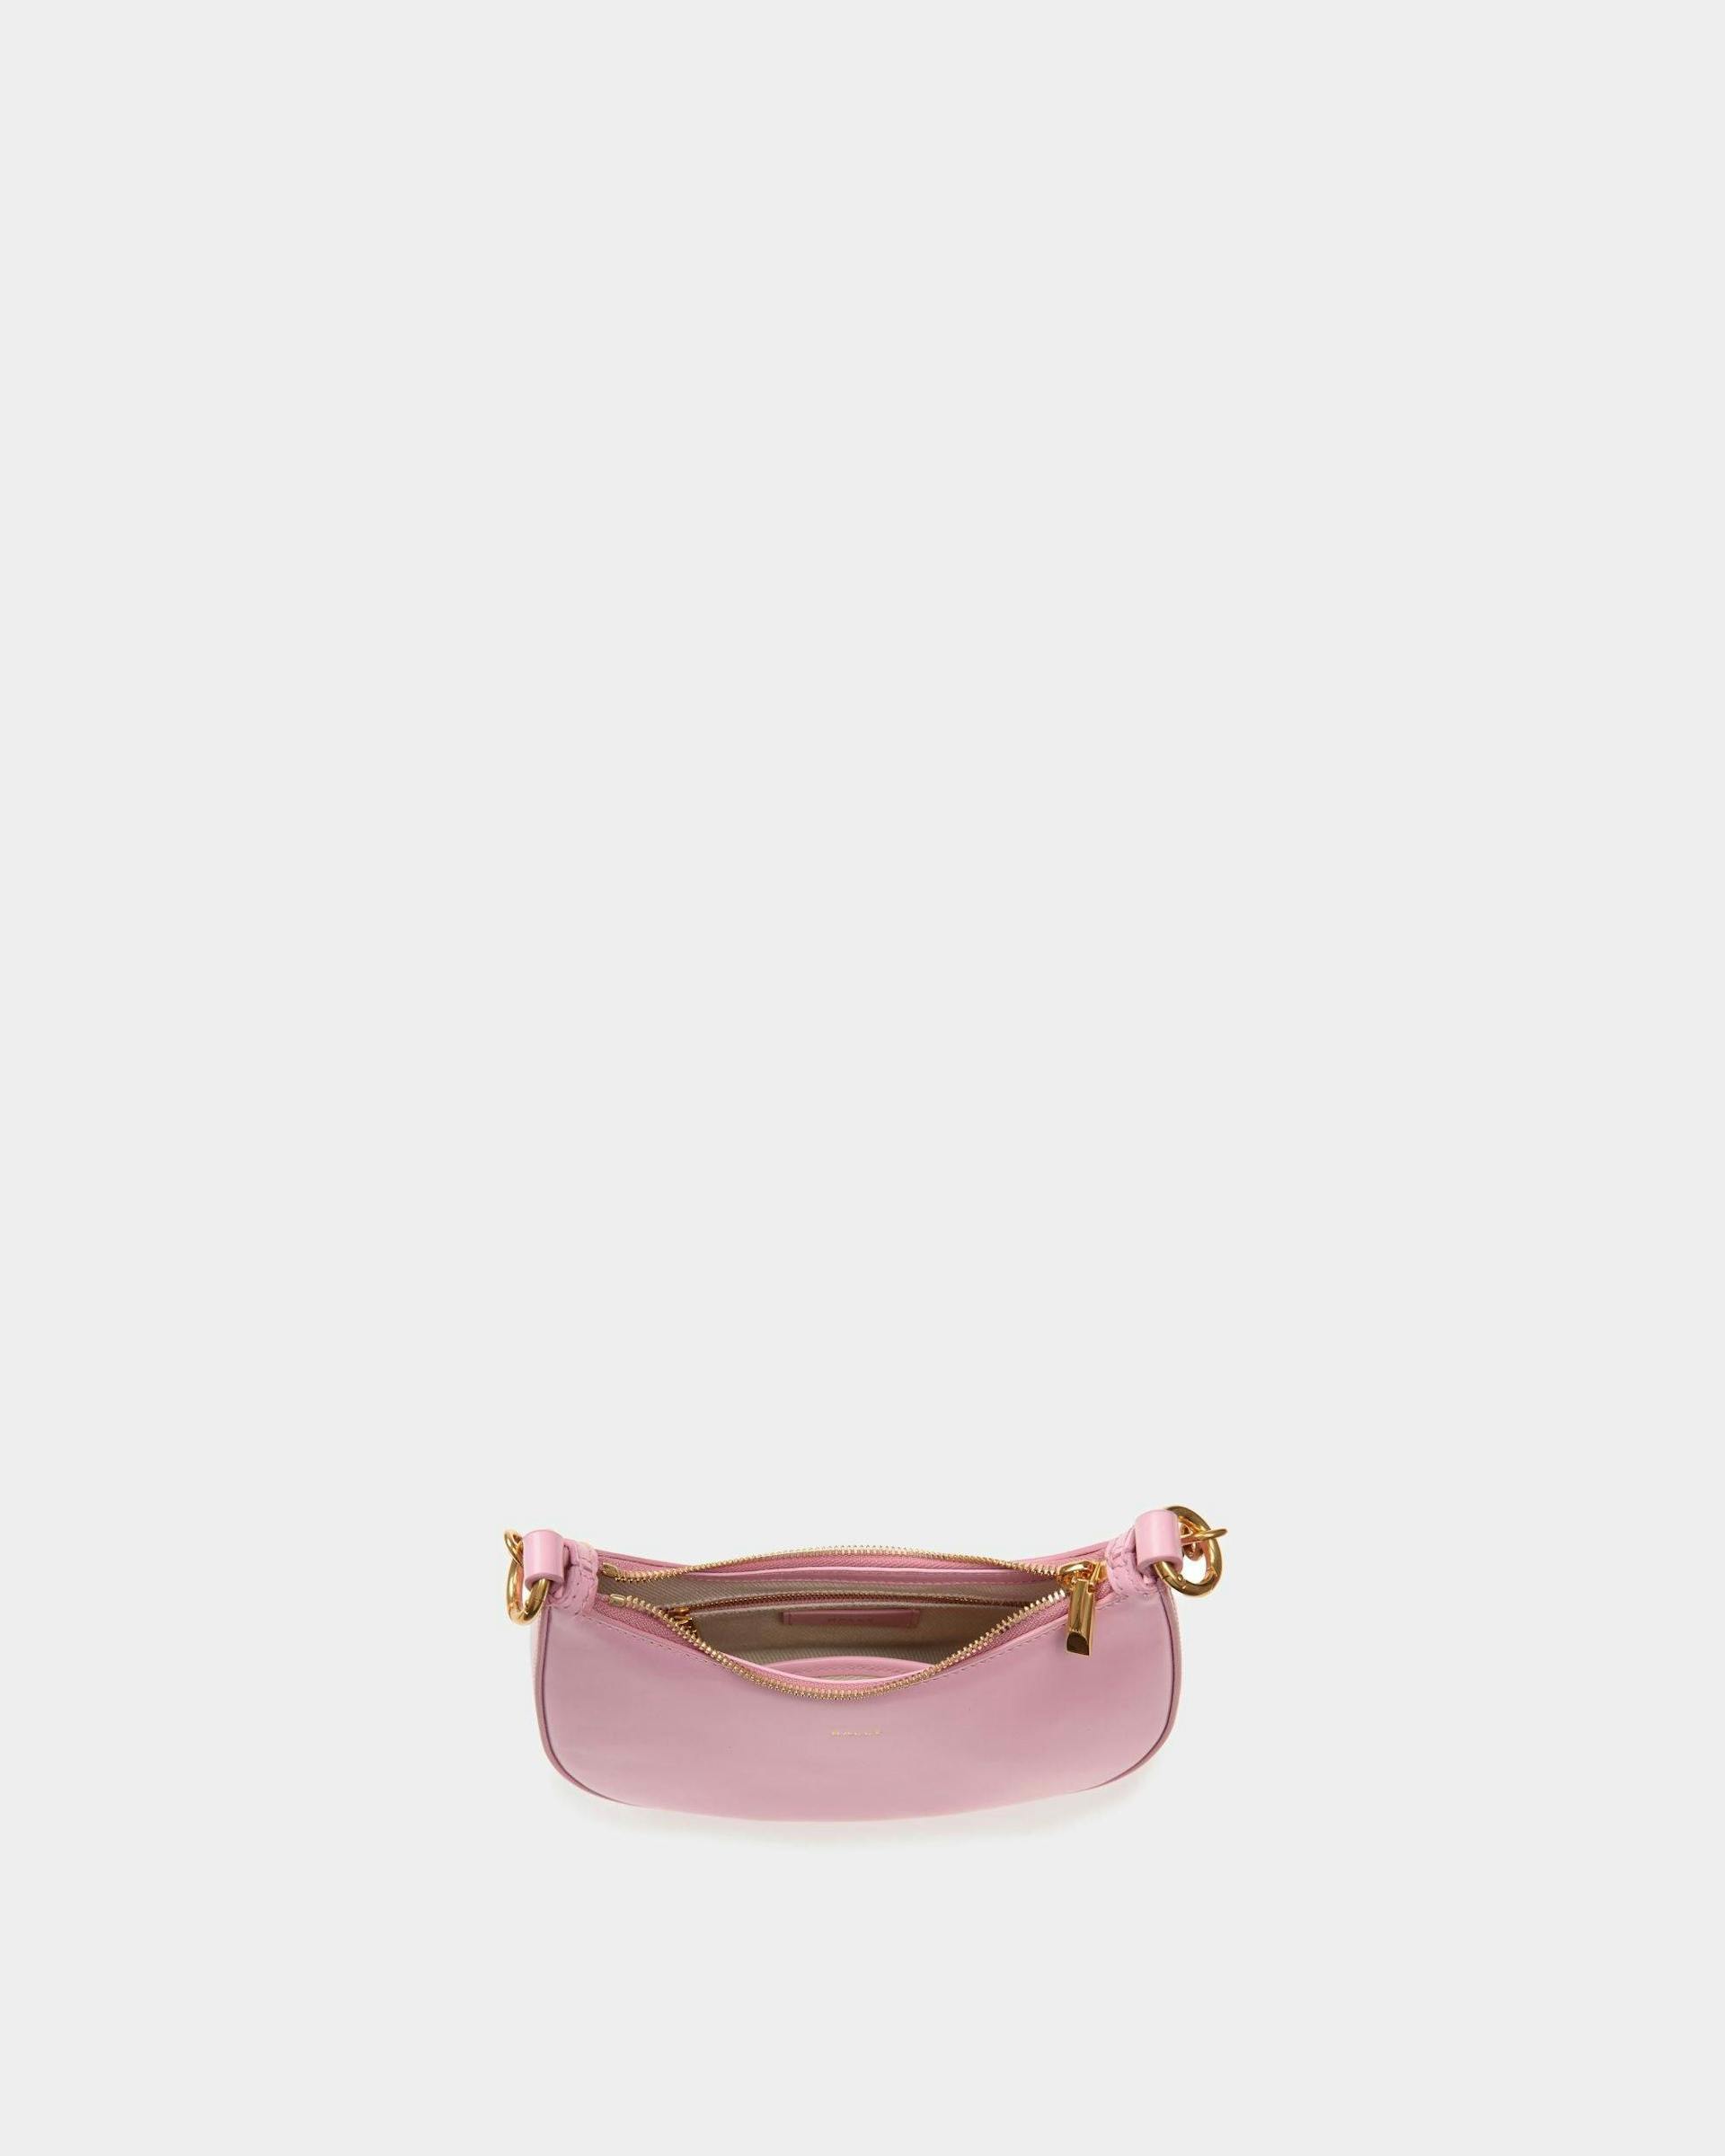 Women's Emblem Mini Crossbody Bag in Pink Patent Leather | Bally | Still Life Open / Inside